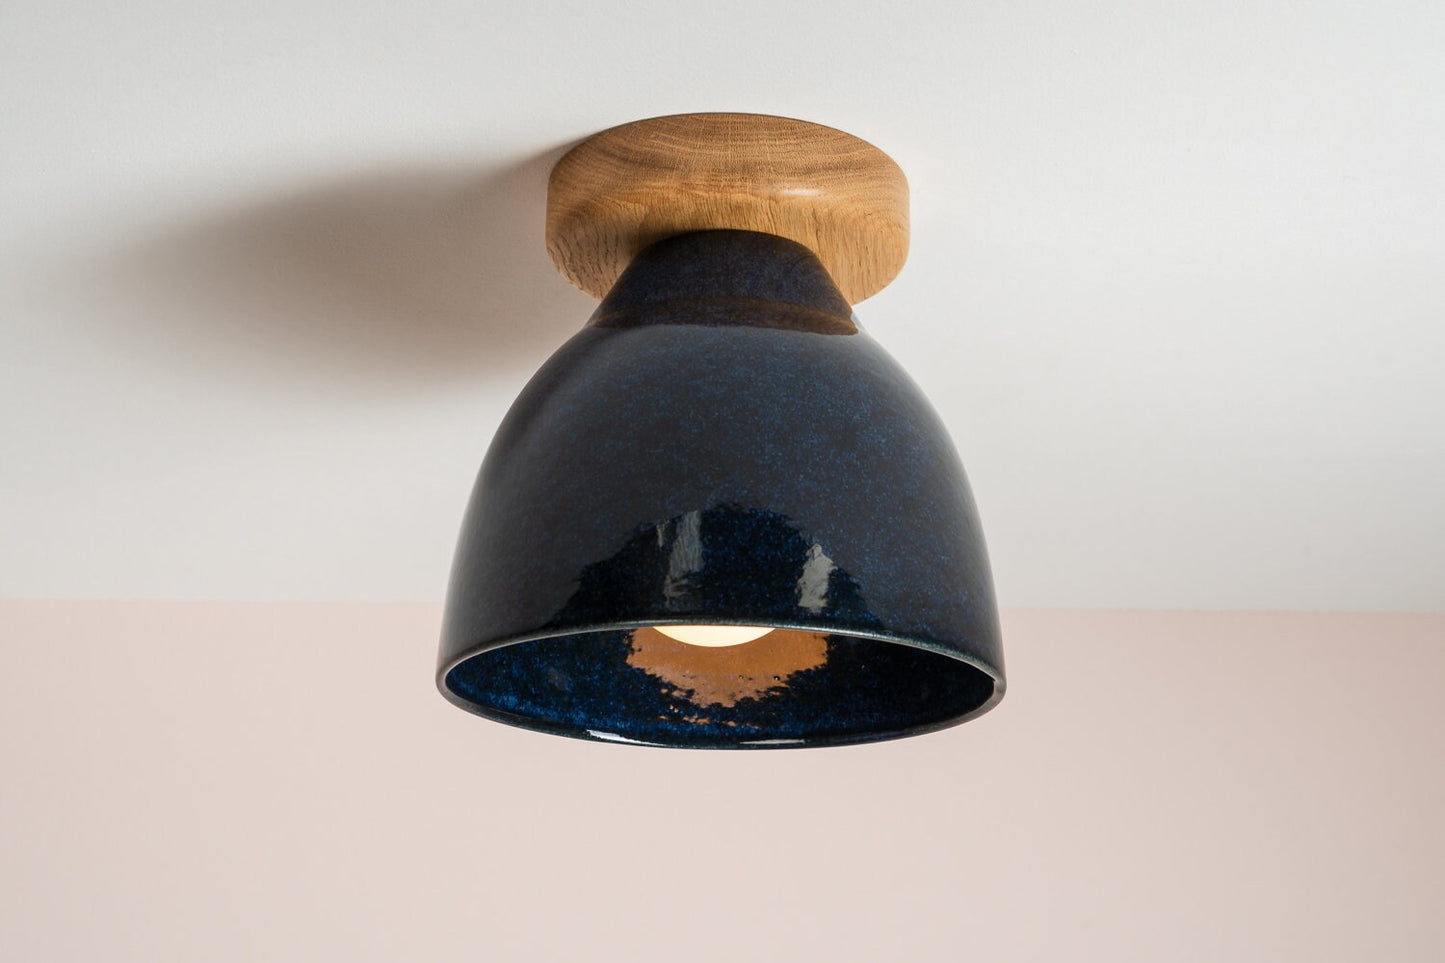 Element flush mount ceiling light in ceramic and oak with a Laguna blue glaze by StudioHaran